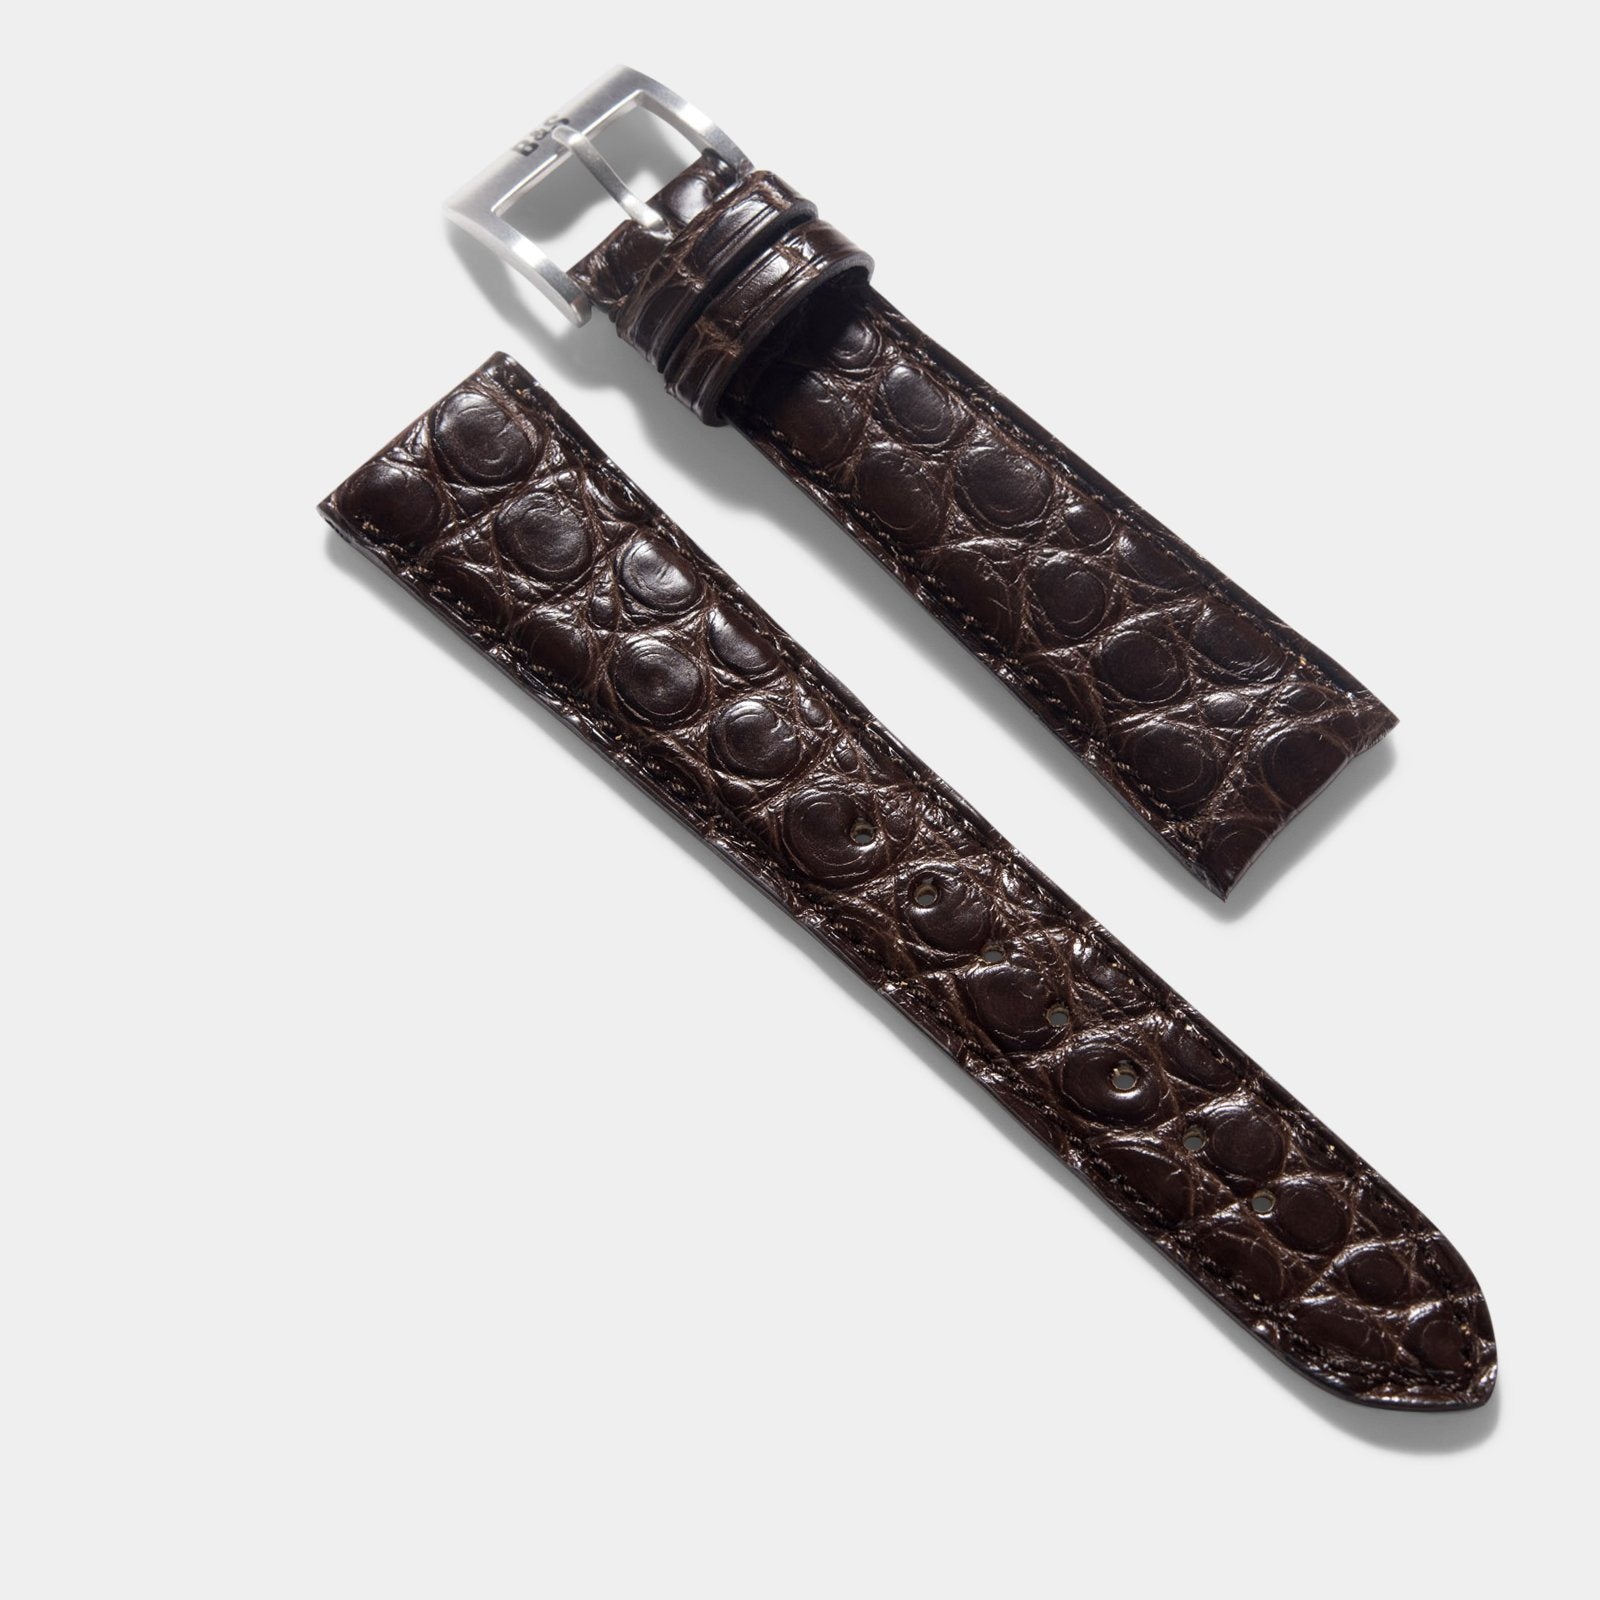 Why choose an alligator skin watch strap - Strapcode